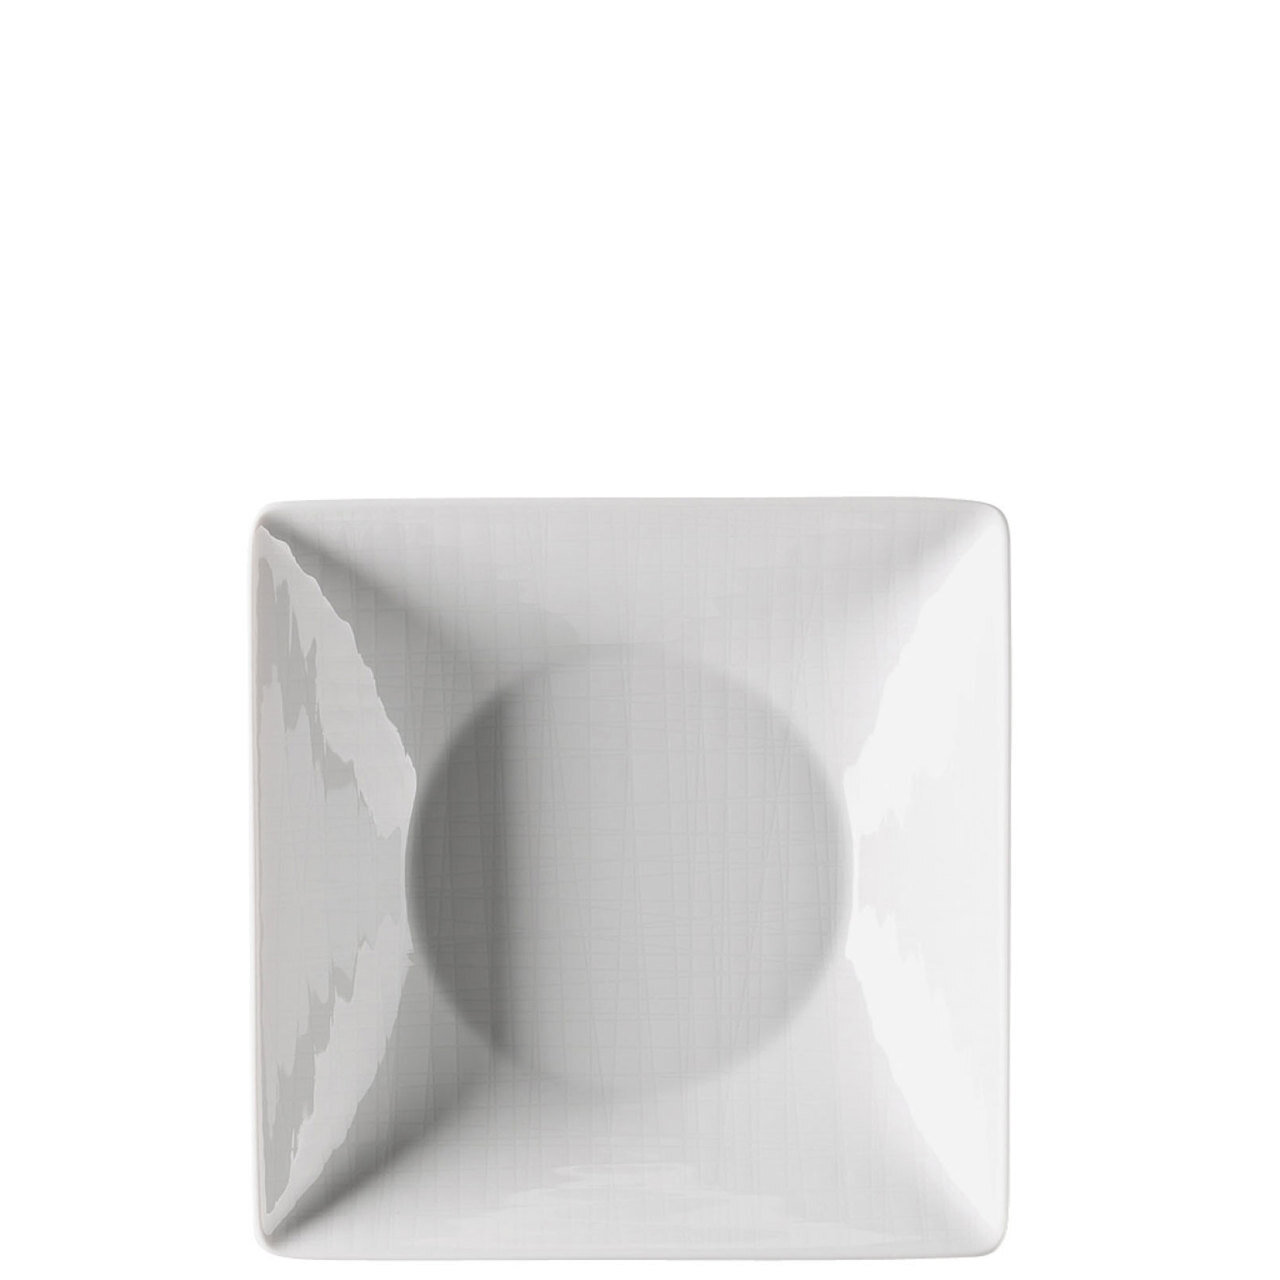 Rosenthal Mesh White Plate Deep Square 8 Inch 24 oz